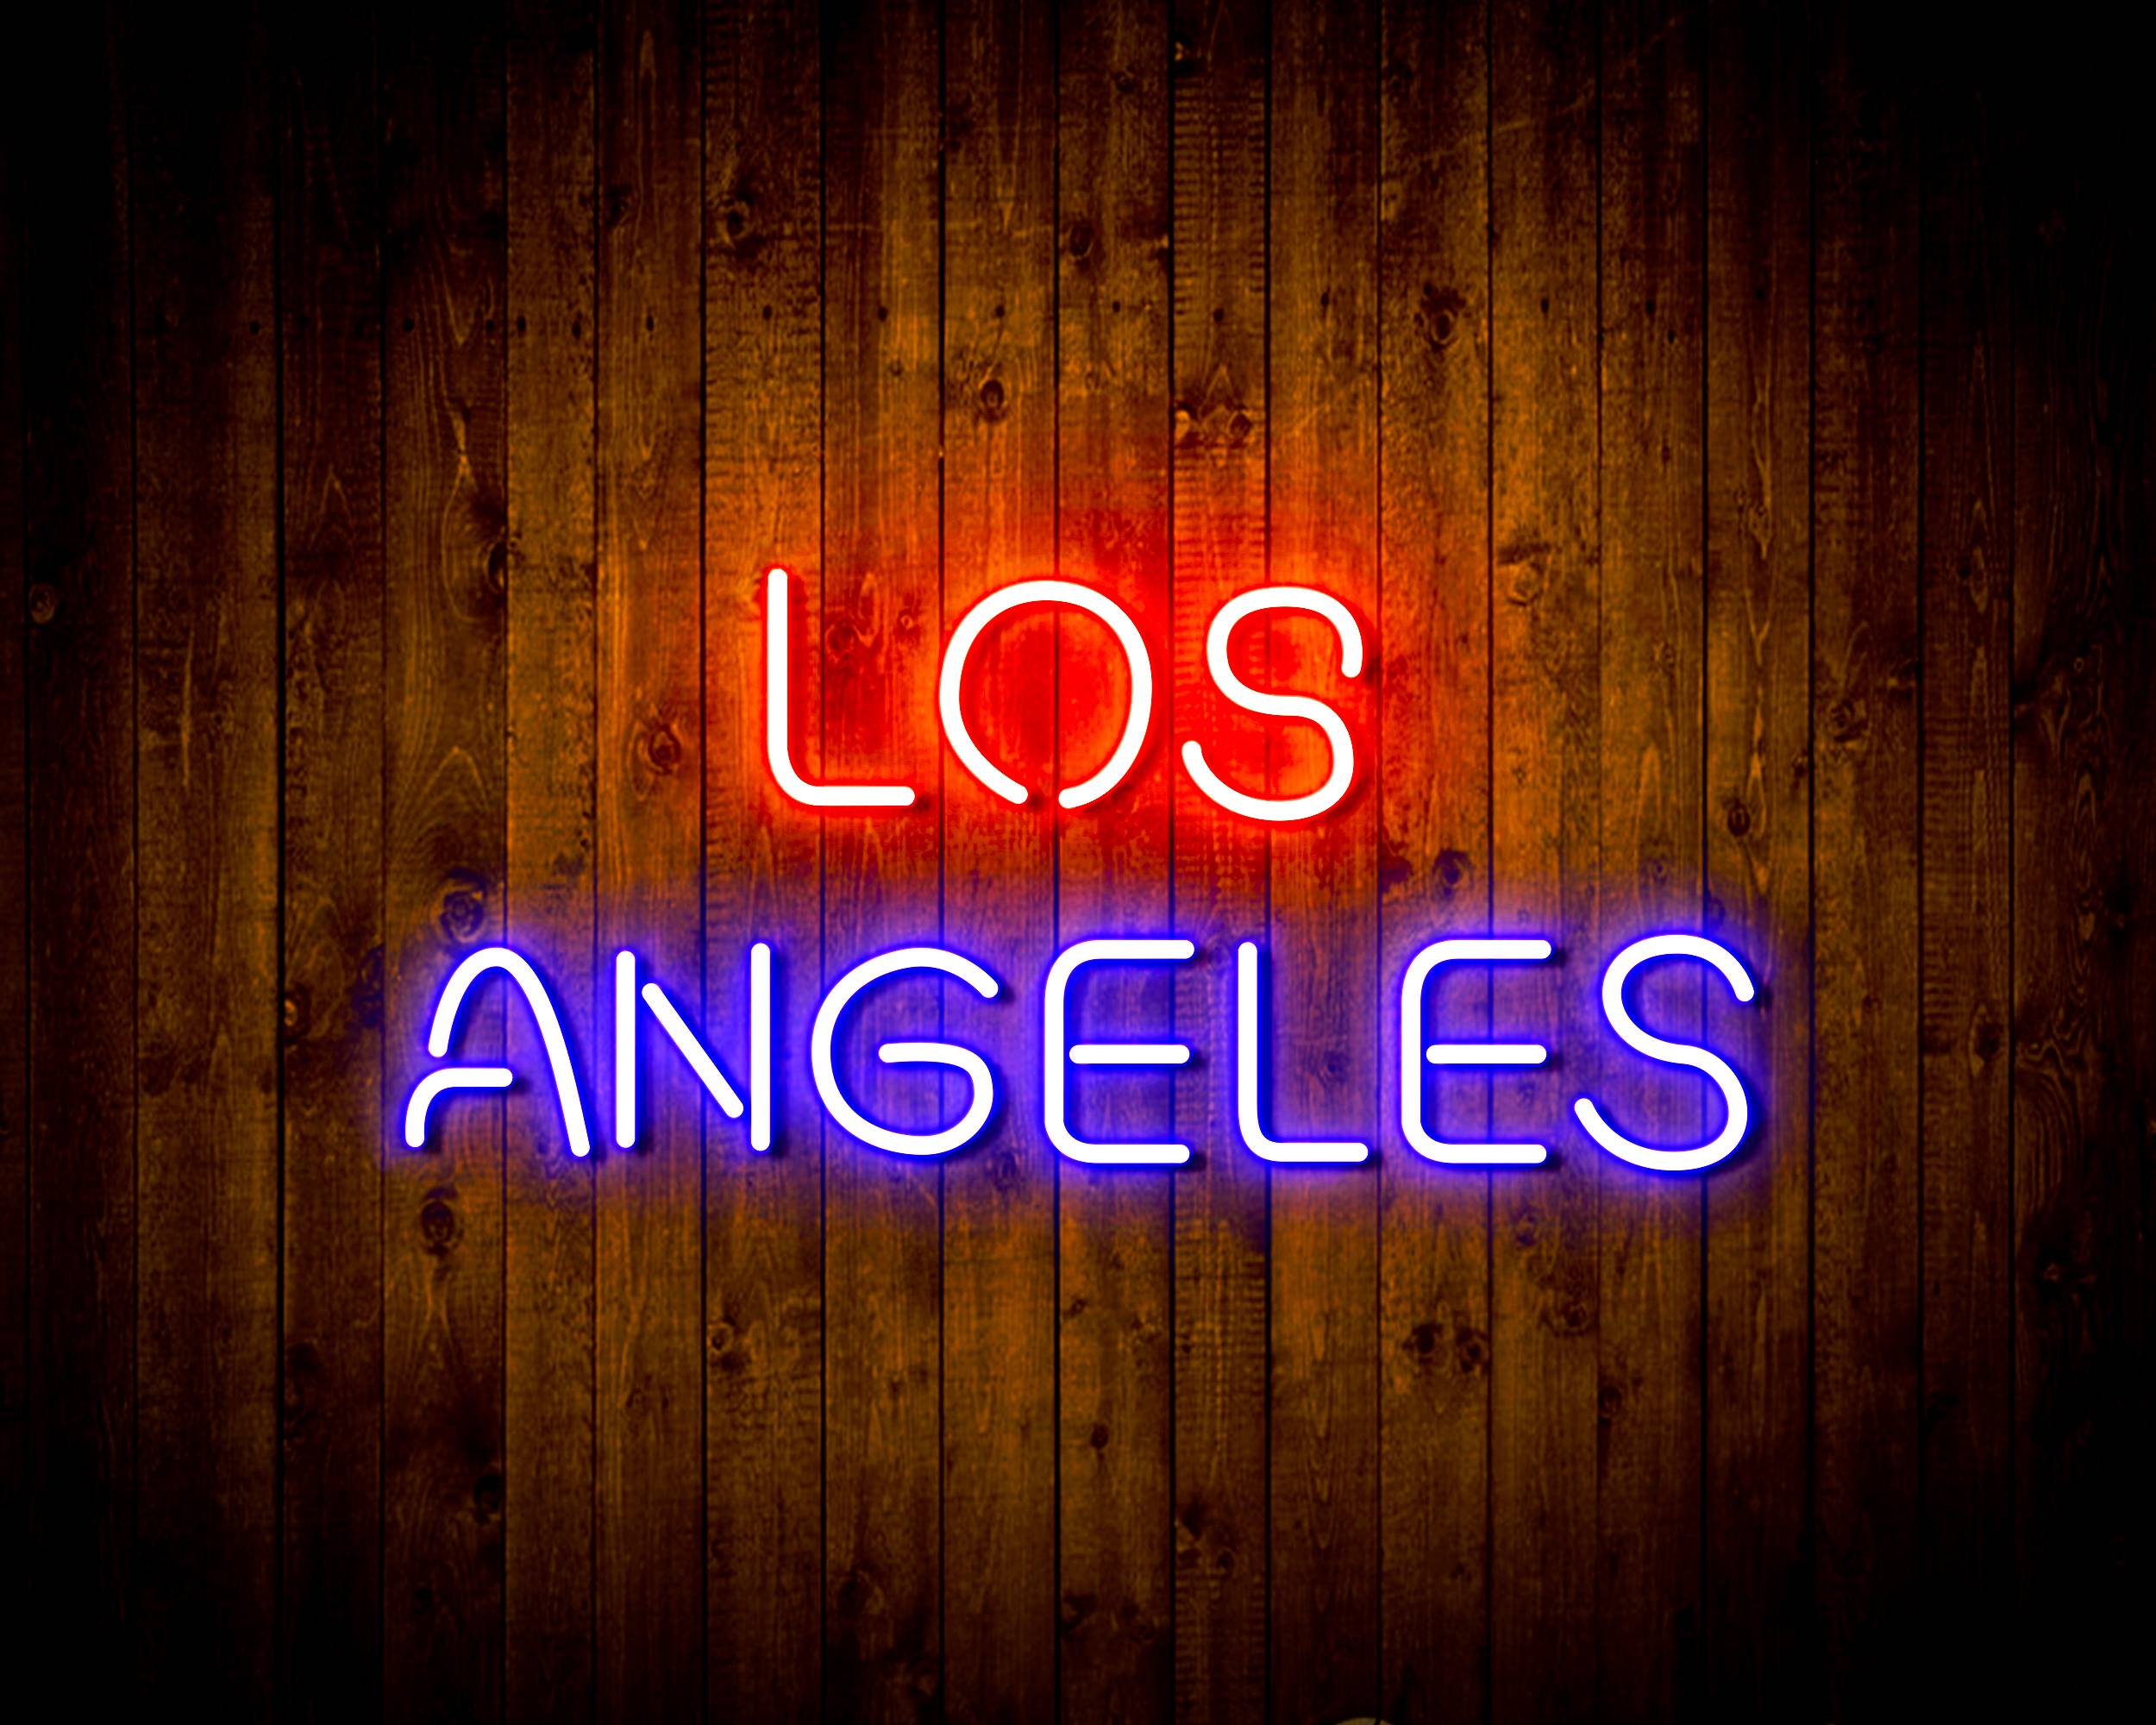 NHL Los Angeles Kings Bar Neon Flex LED Sign